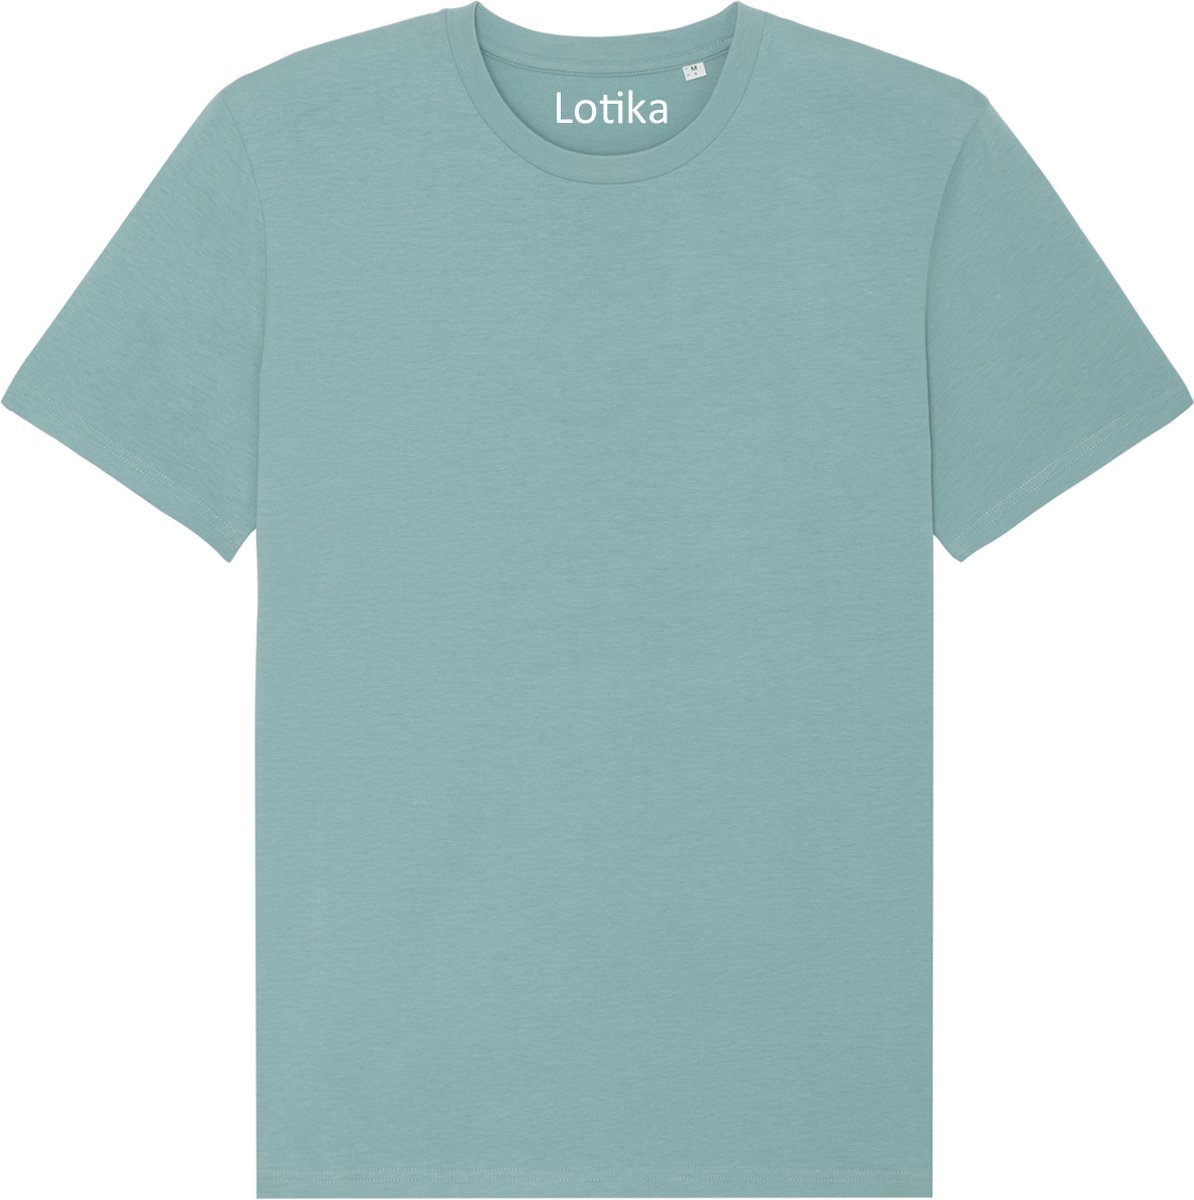 Lotika Daan T-shirt biologisch katoen teal monstera maat L